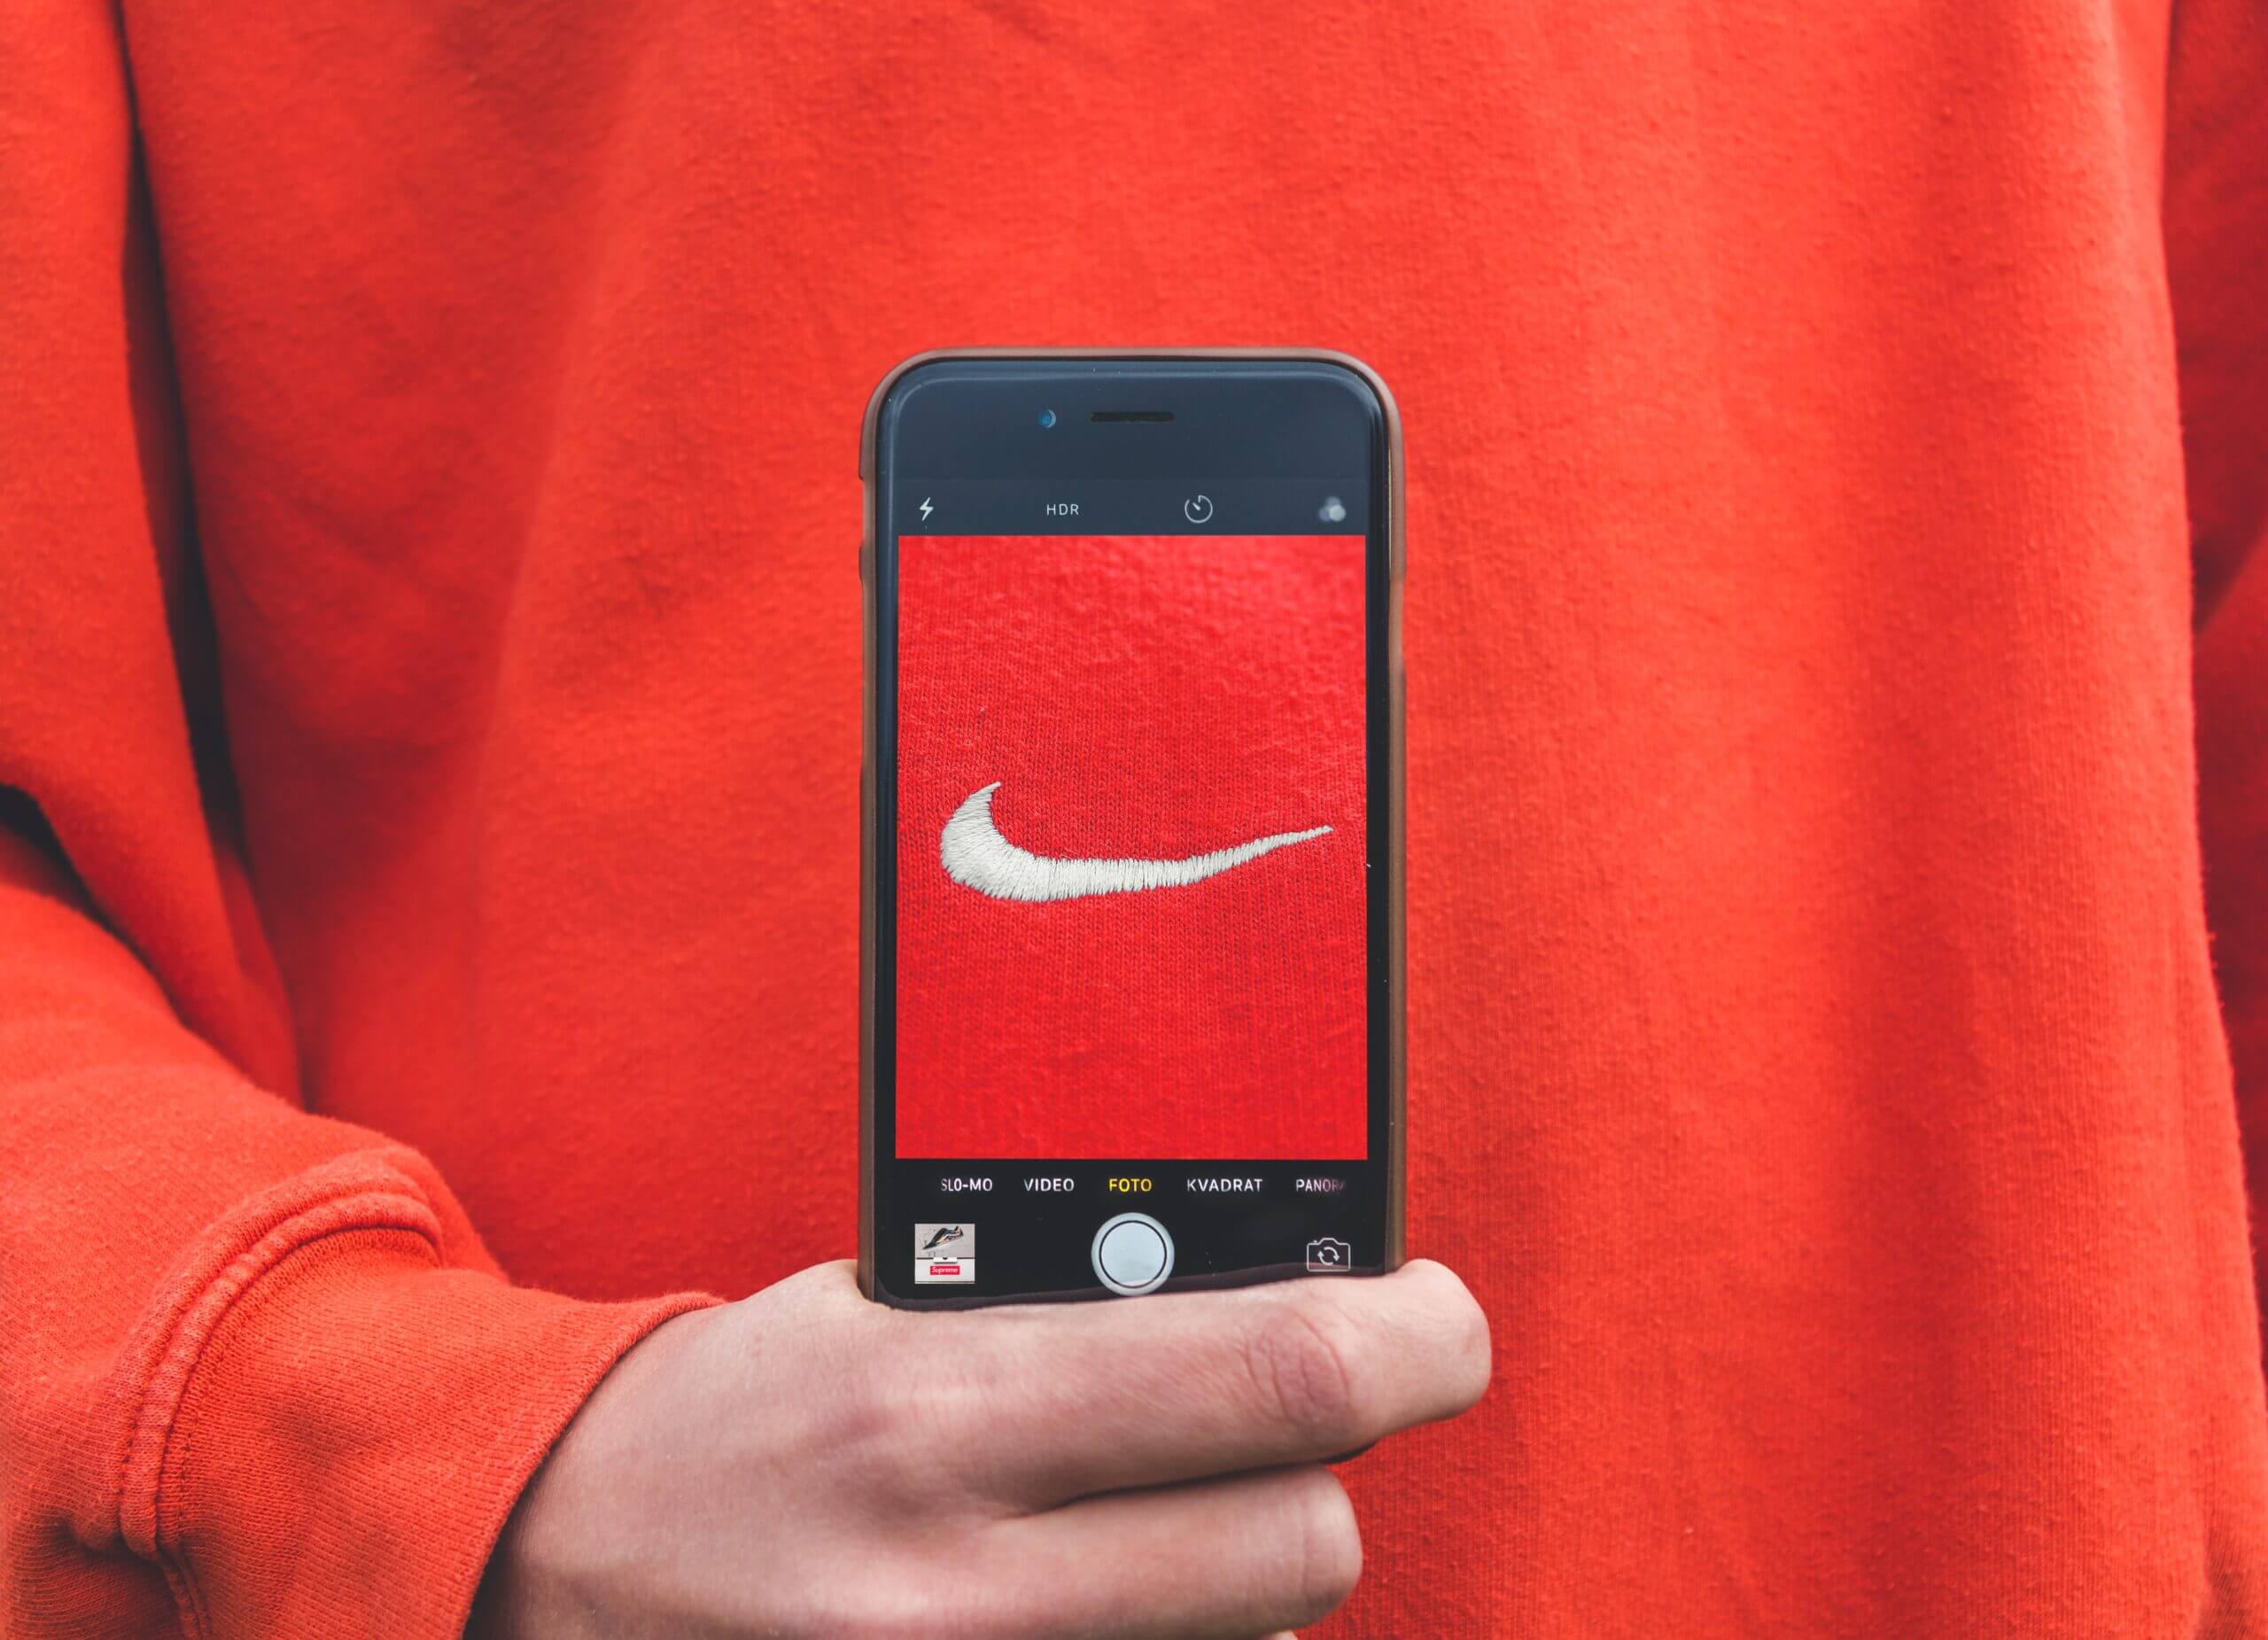 Red Nike sweater viewed through iPhone camera